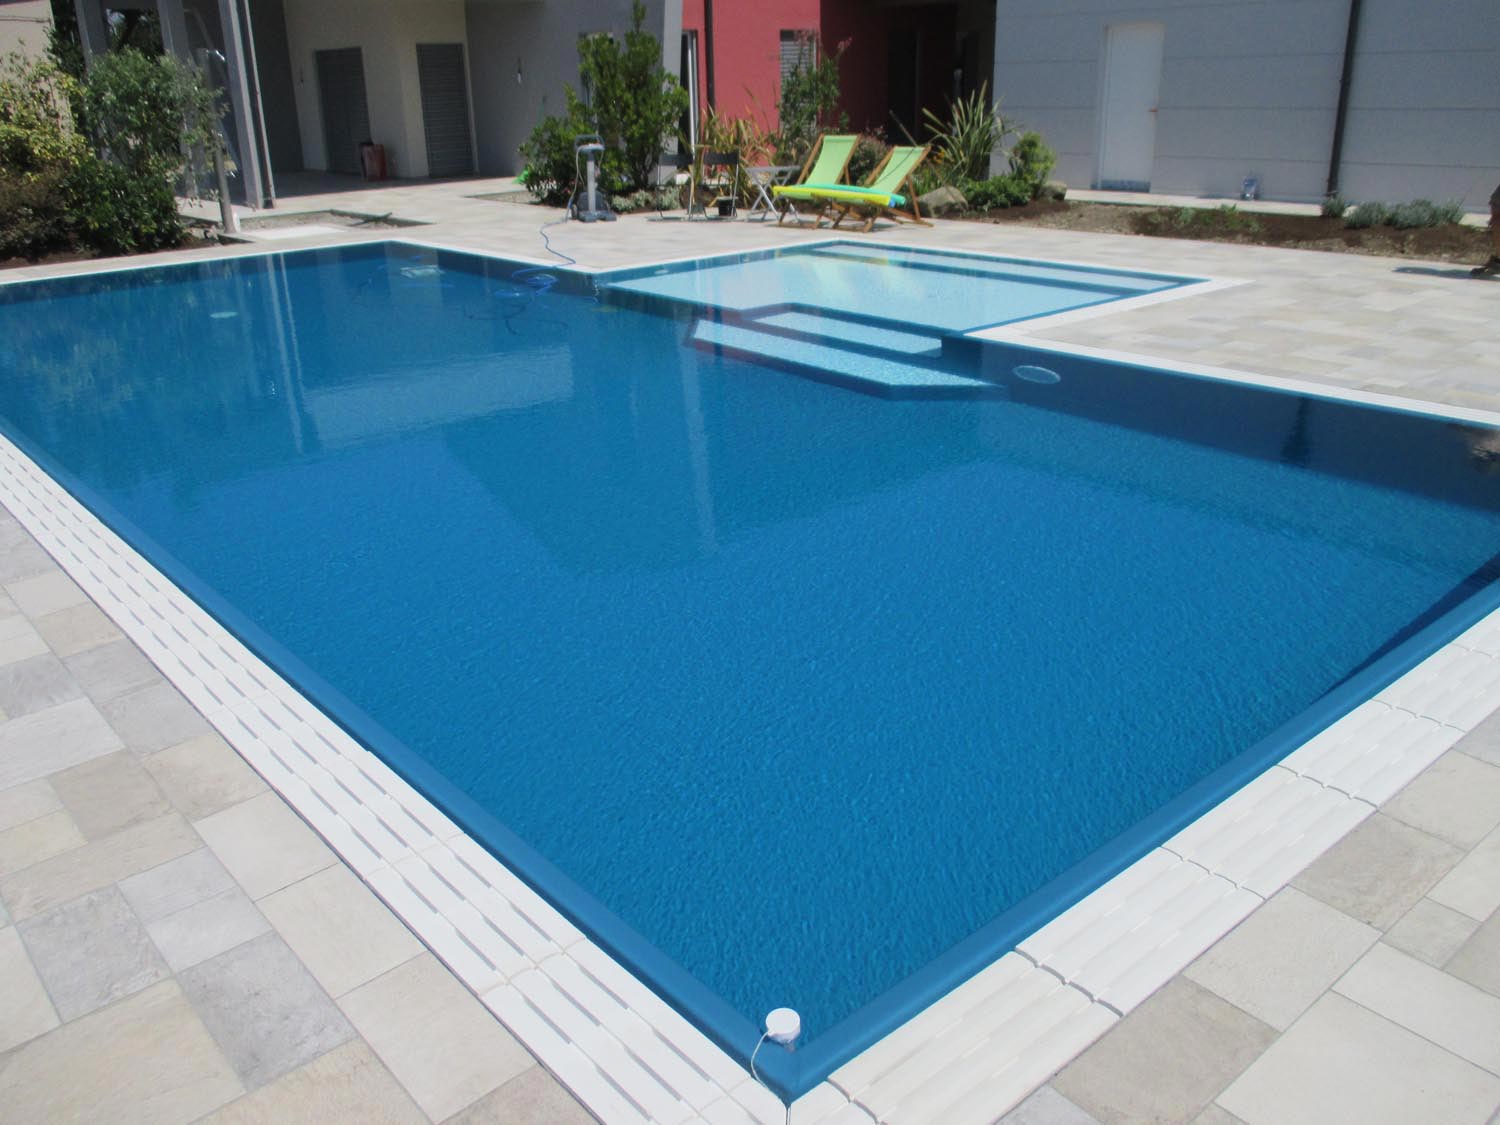 Vista totale di una piscina isotermica senza vasca di compensazione con griglia in pietra ricostruita bianca.